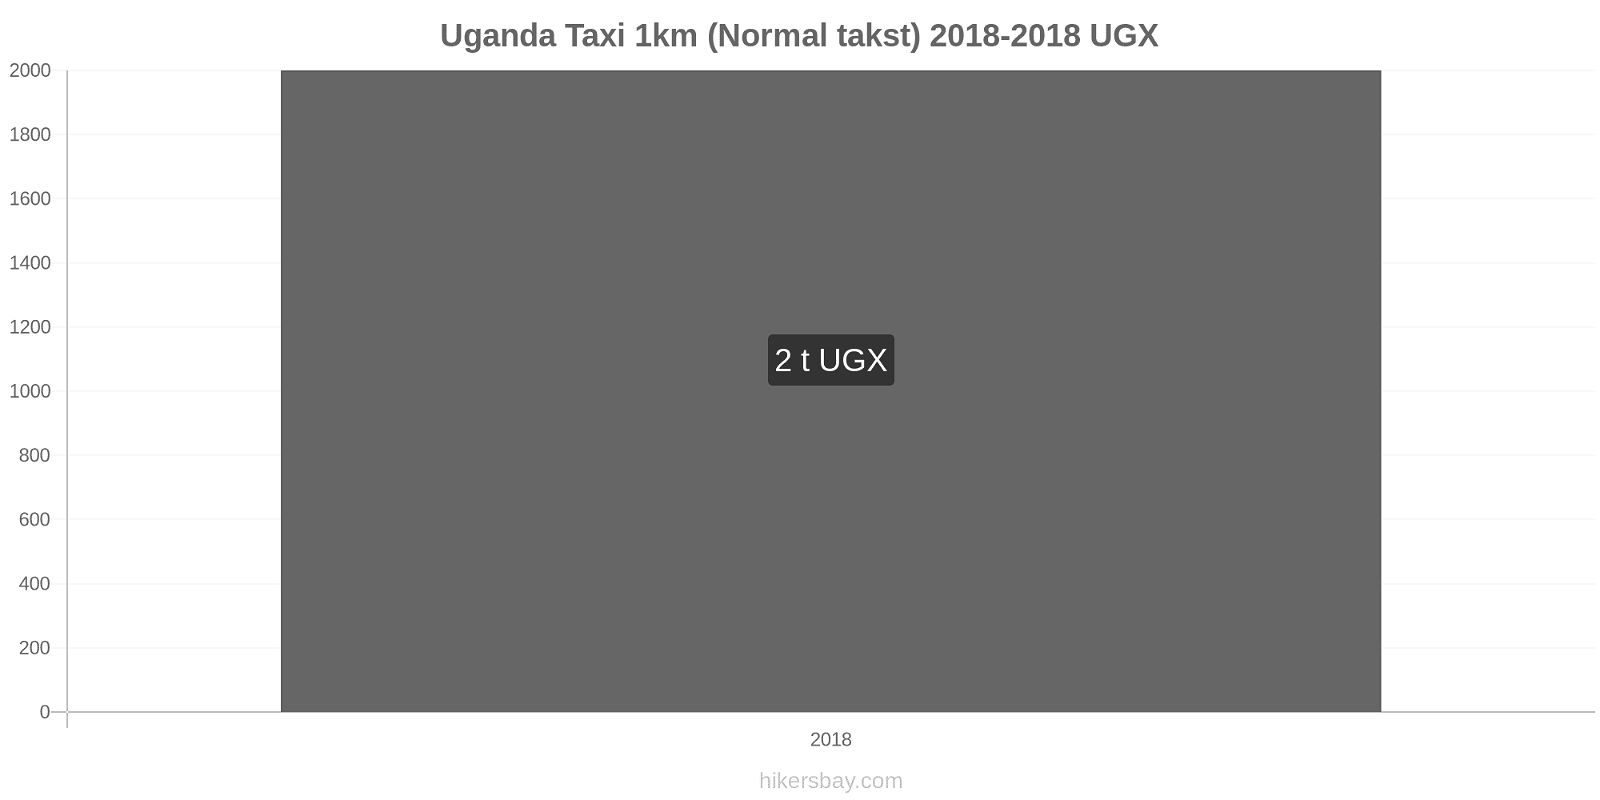 Uganda prisændringer Taxi 1km (normal takst) hikersbay.com